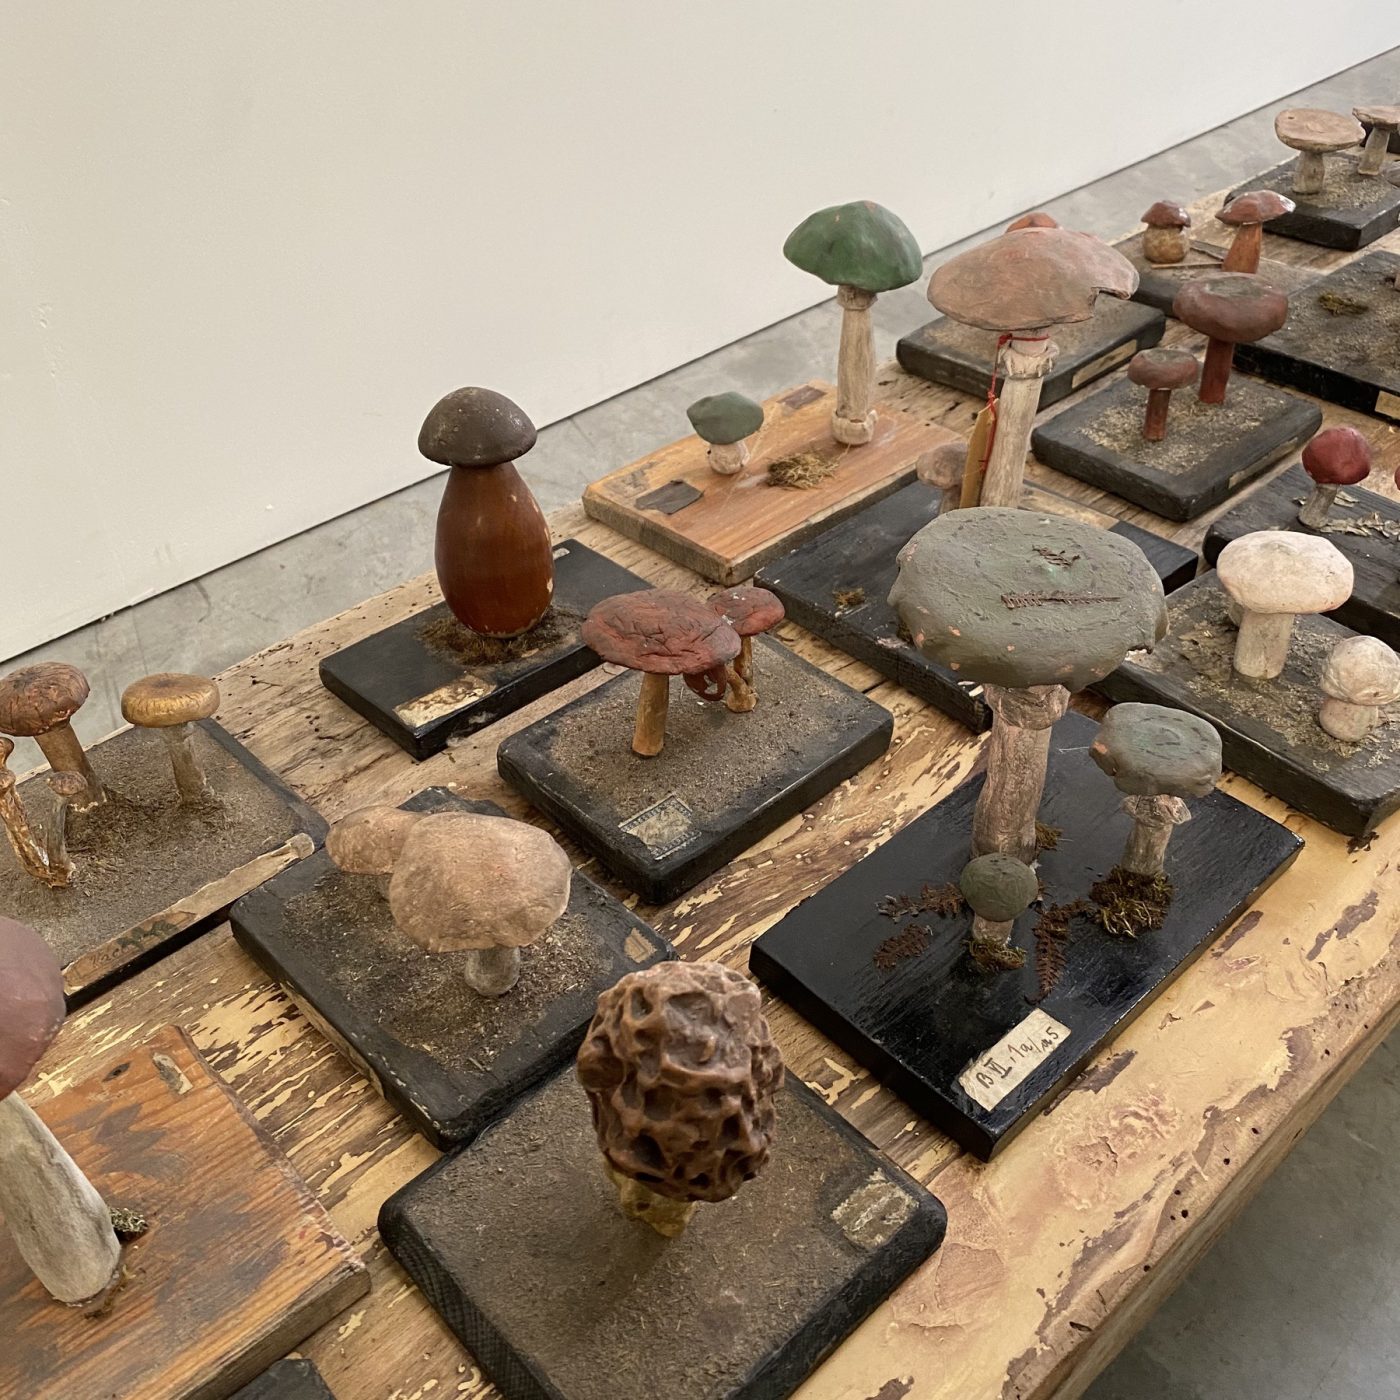 objet-vagabond-mushrooms-collection0005